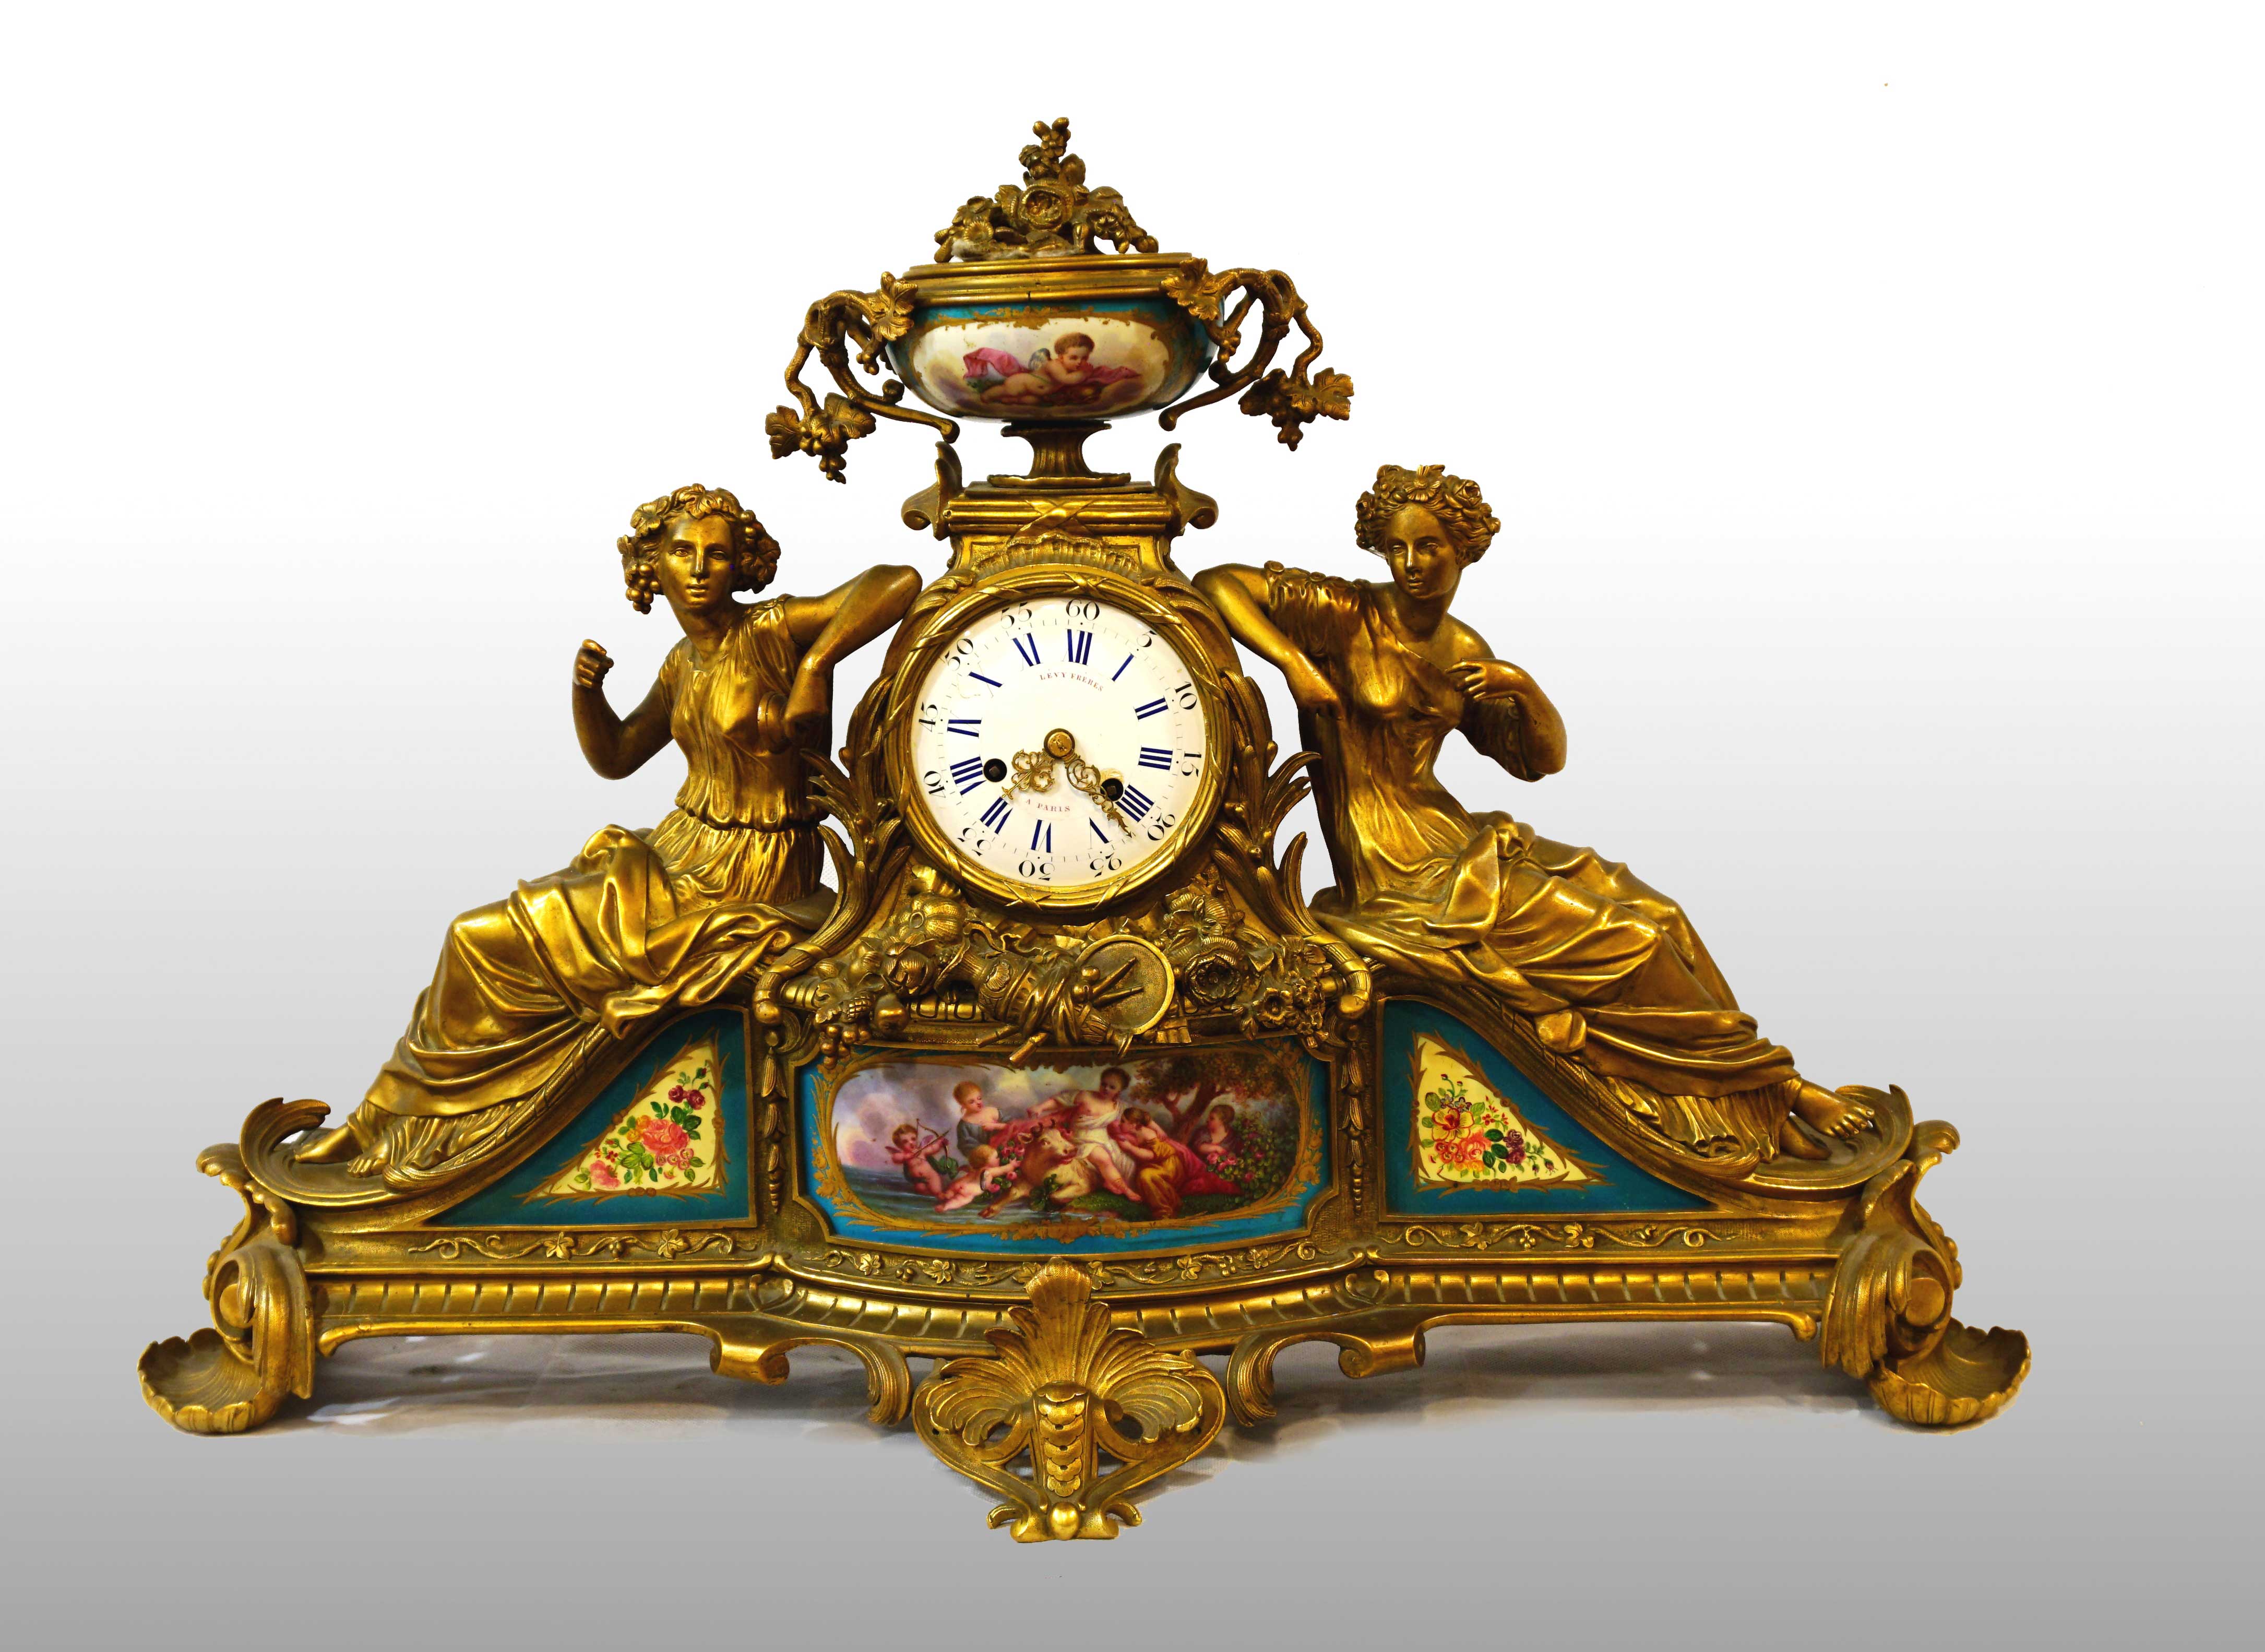 FRENCH CLOCK LEVY FRERES | Auction House Auction Affair: Antique ...